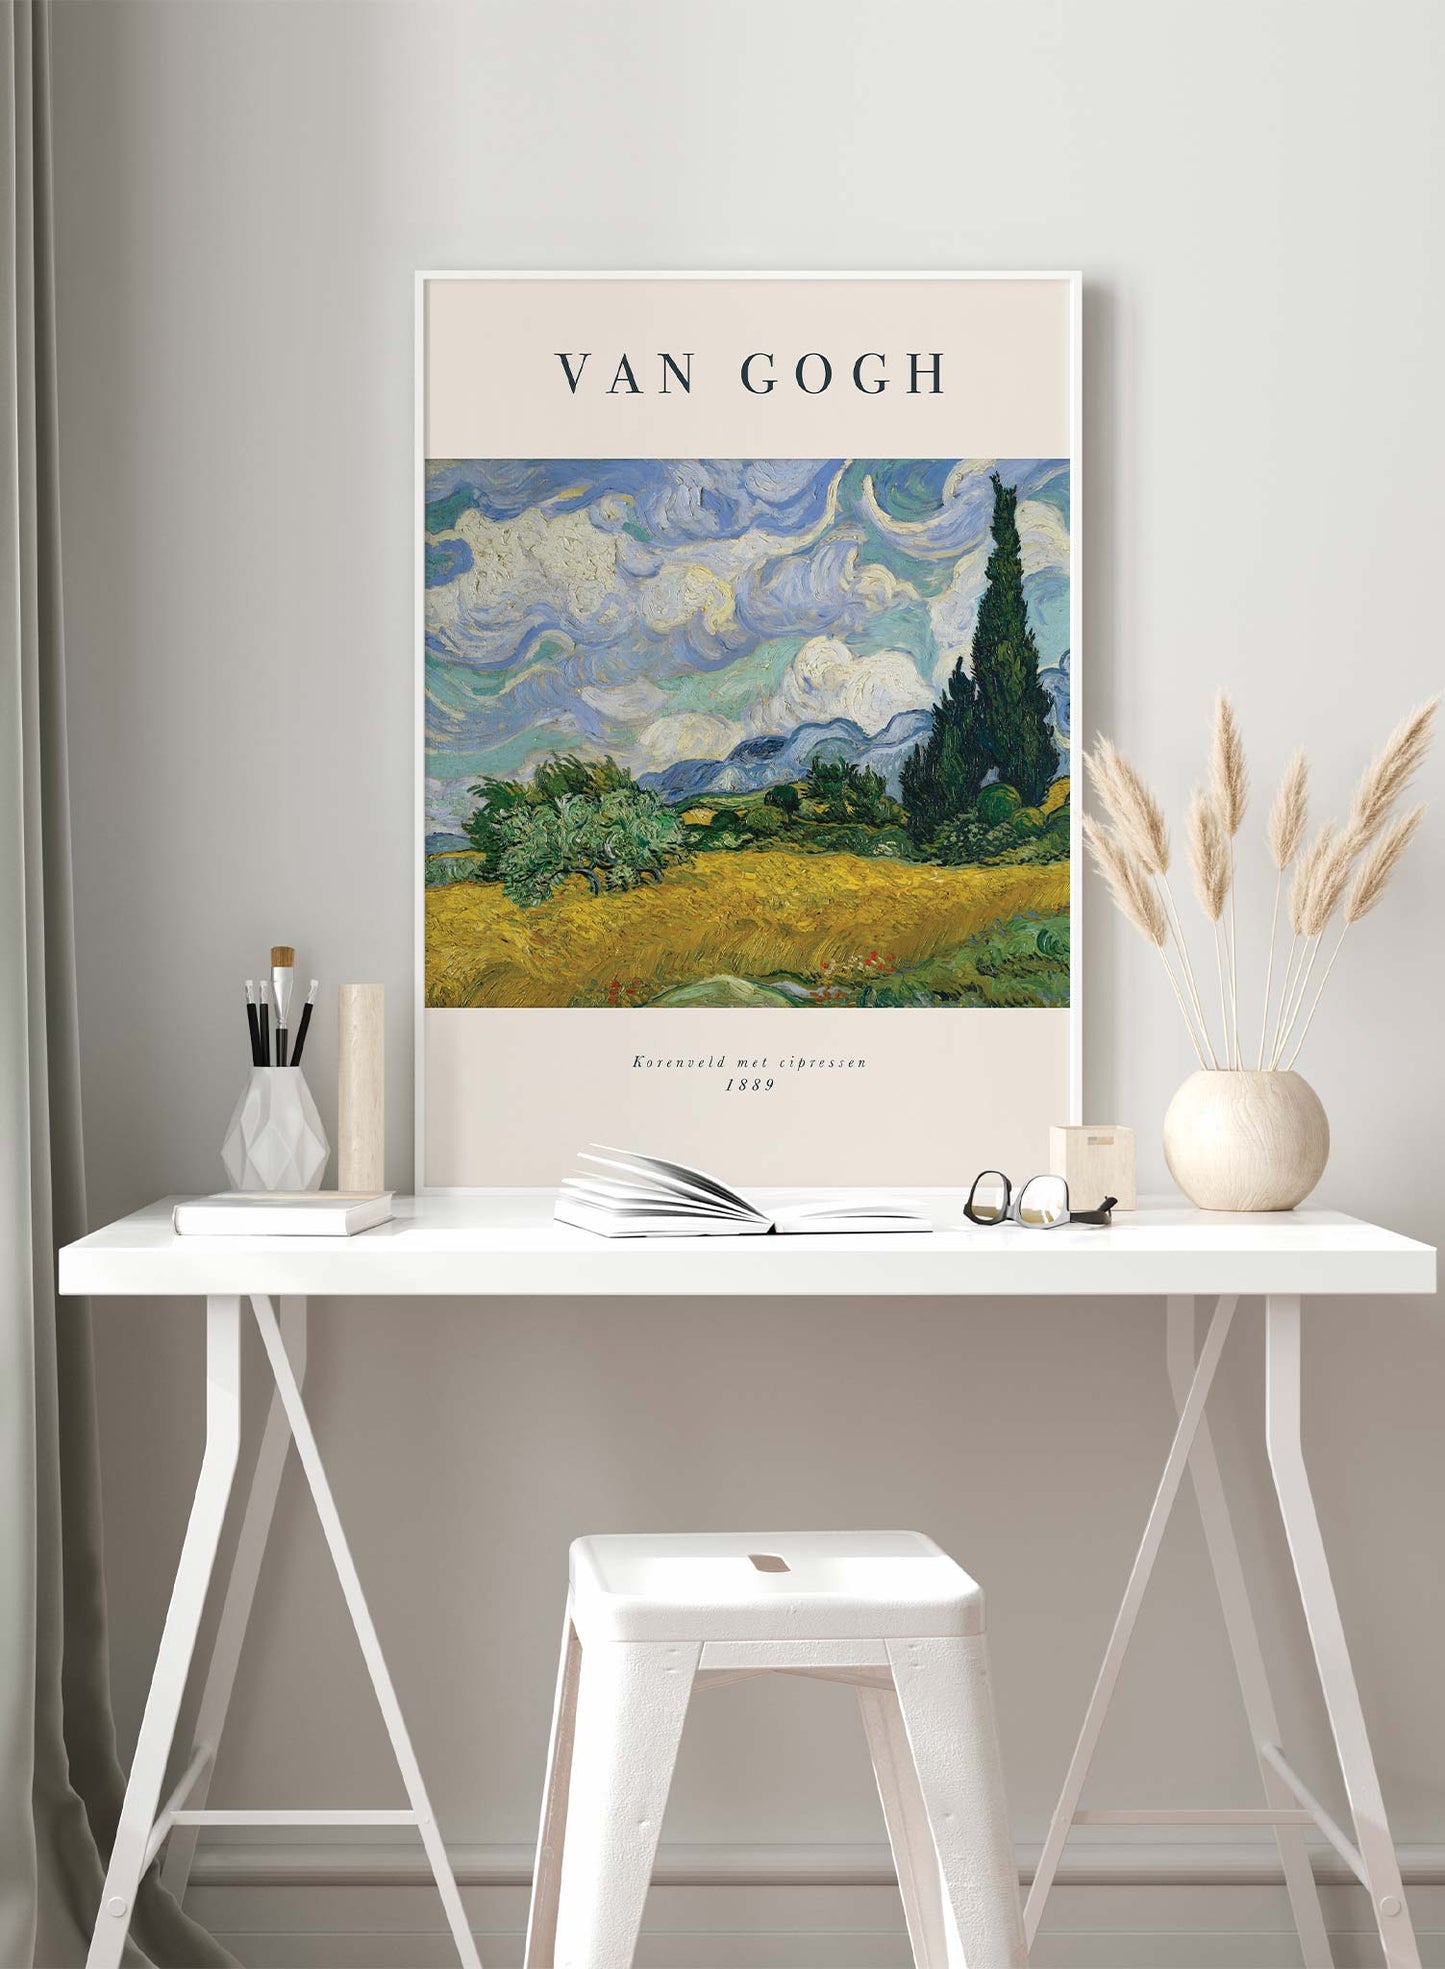 Wheat Field with Cypresses is a minimalist artwork by Opposite Wall of Van Gogh's Korenveld met cipressen from 1889.